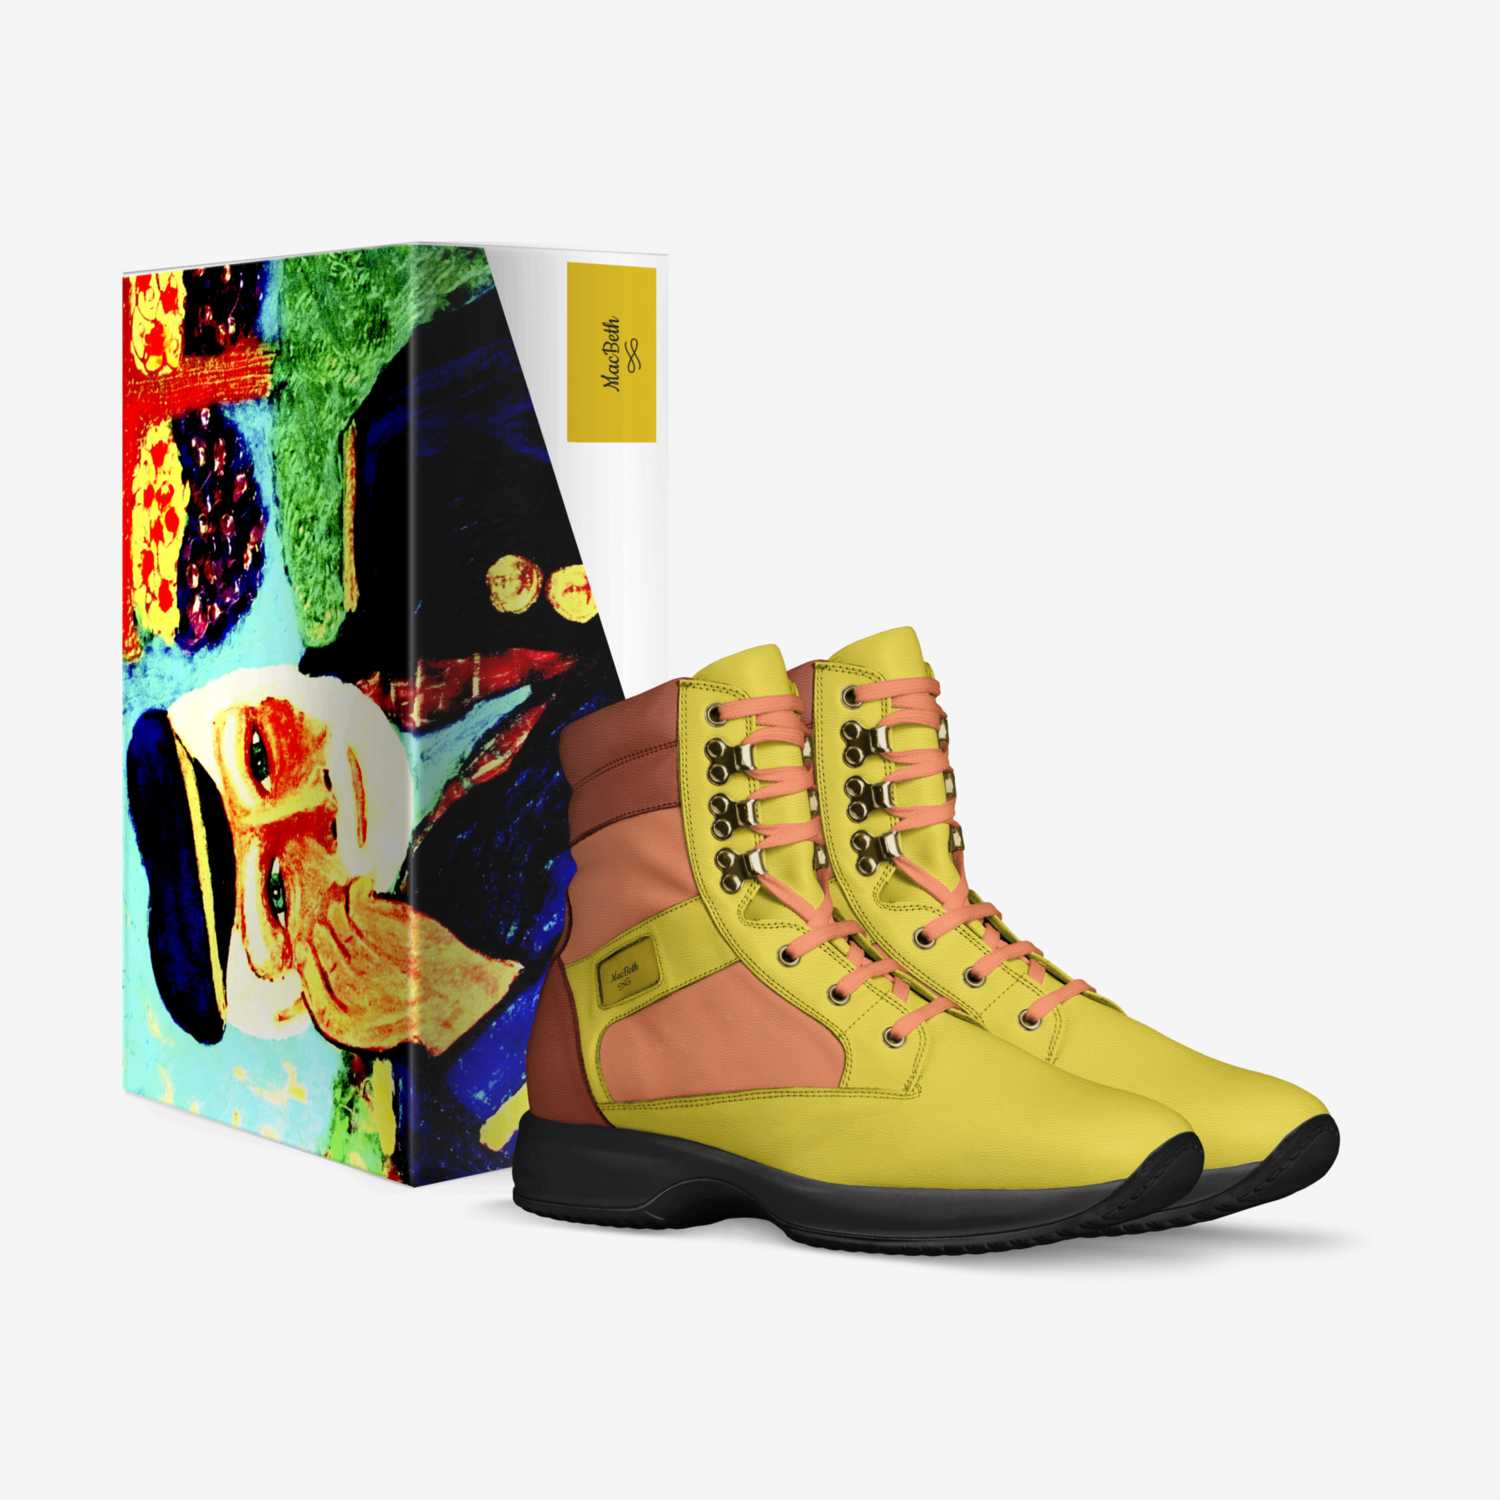 MacBeth custom made in Italy shoes by Lauretta Macbeth | Box view